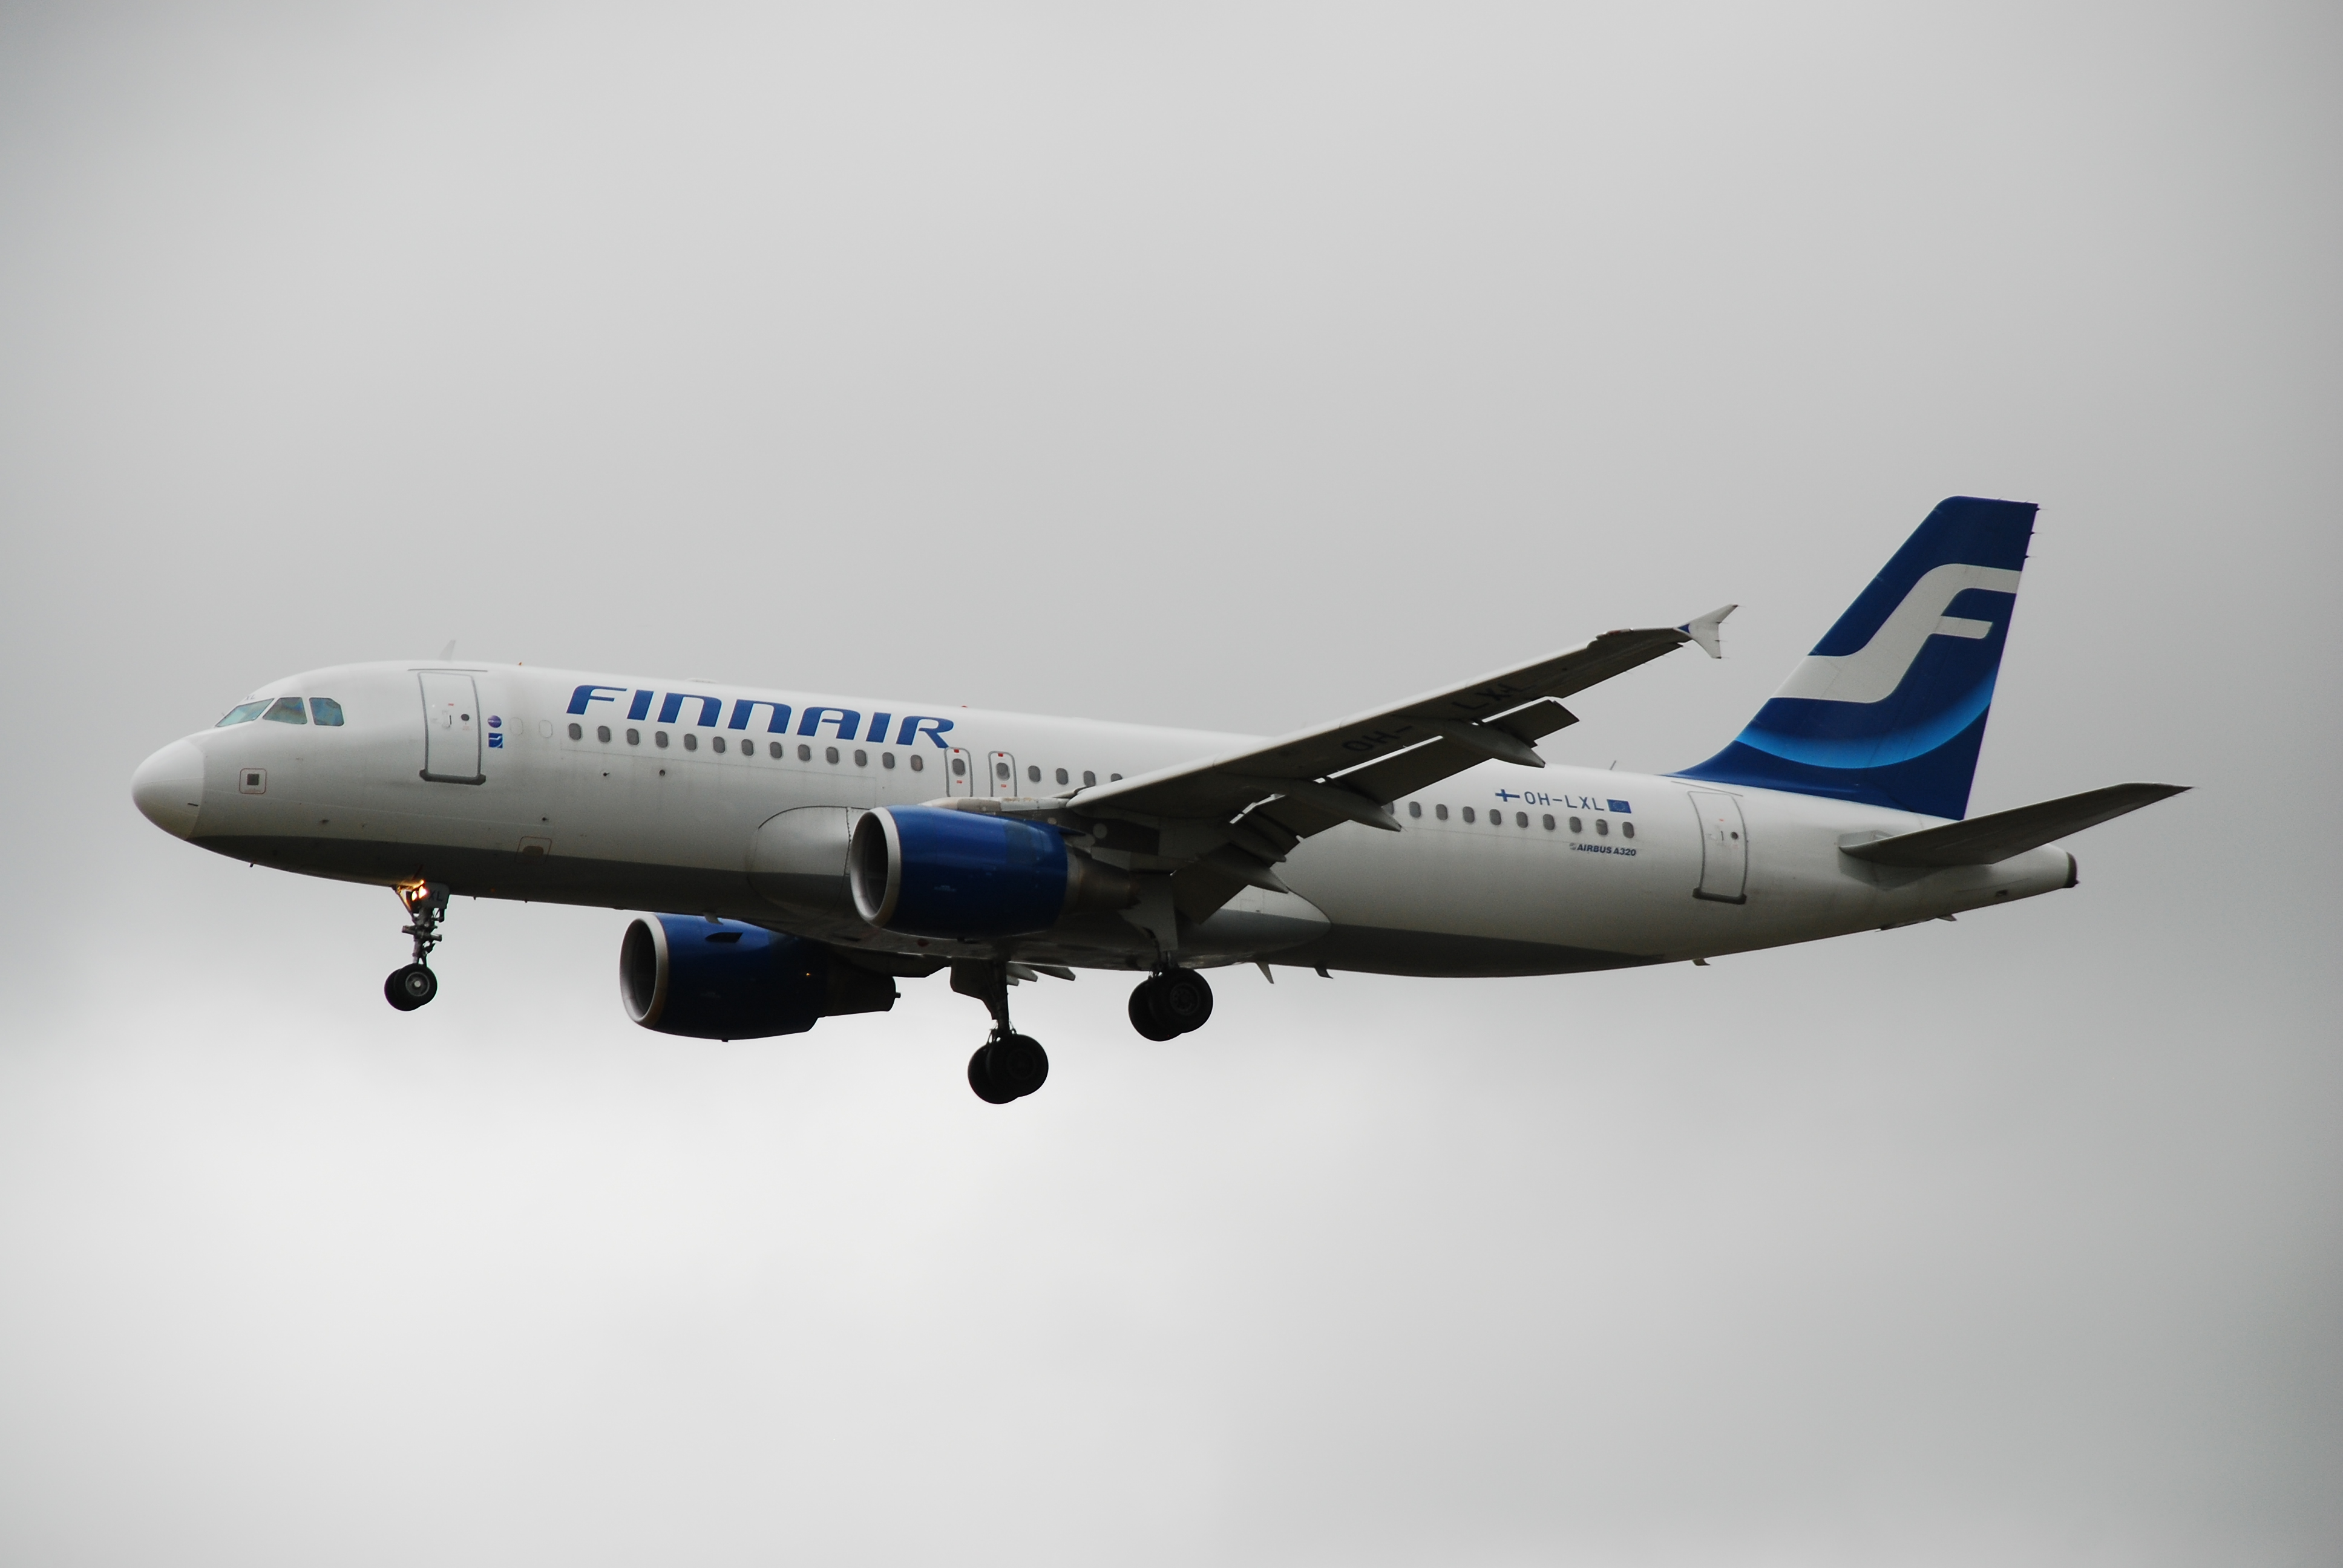 OH-LXL/OHLXL Finnair Airbus A320 Airframe Information - AVSpotters.com